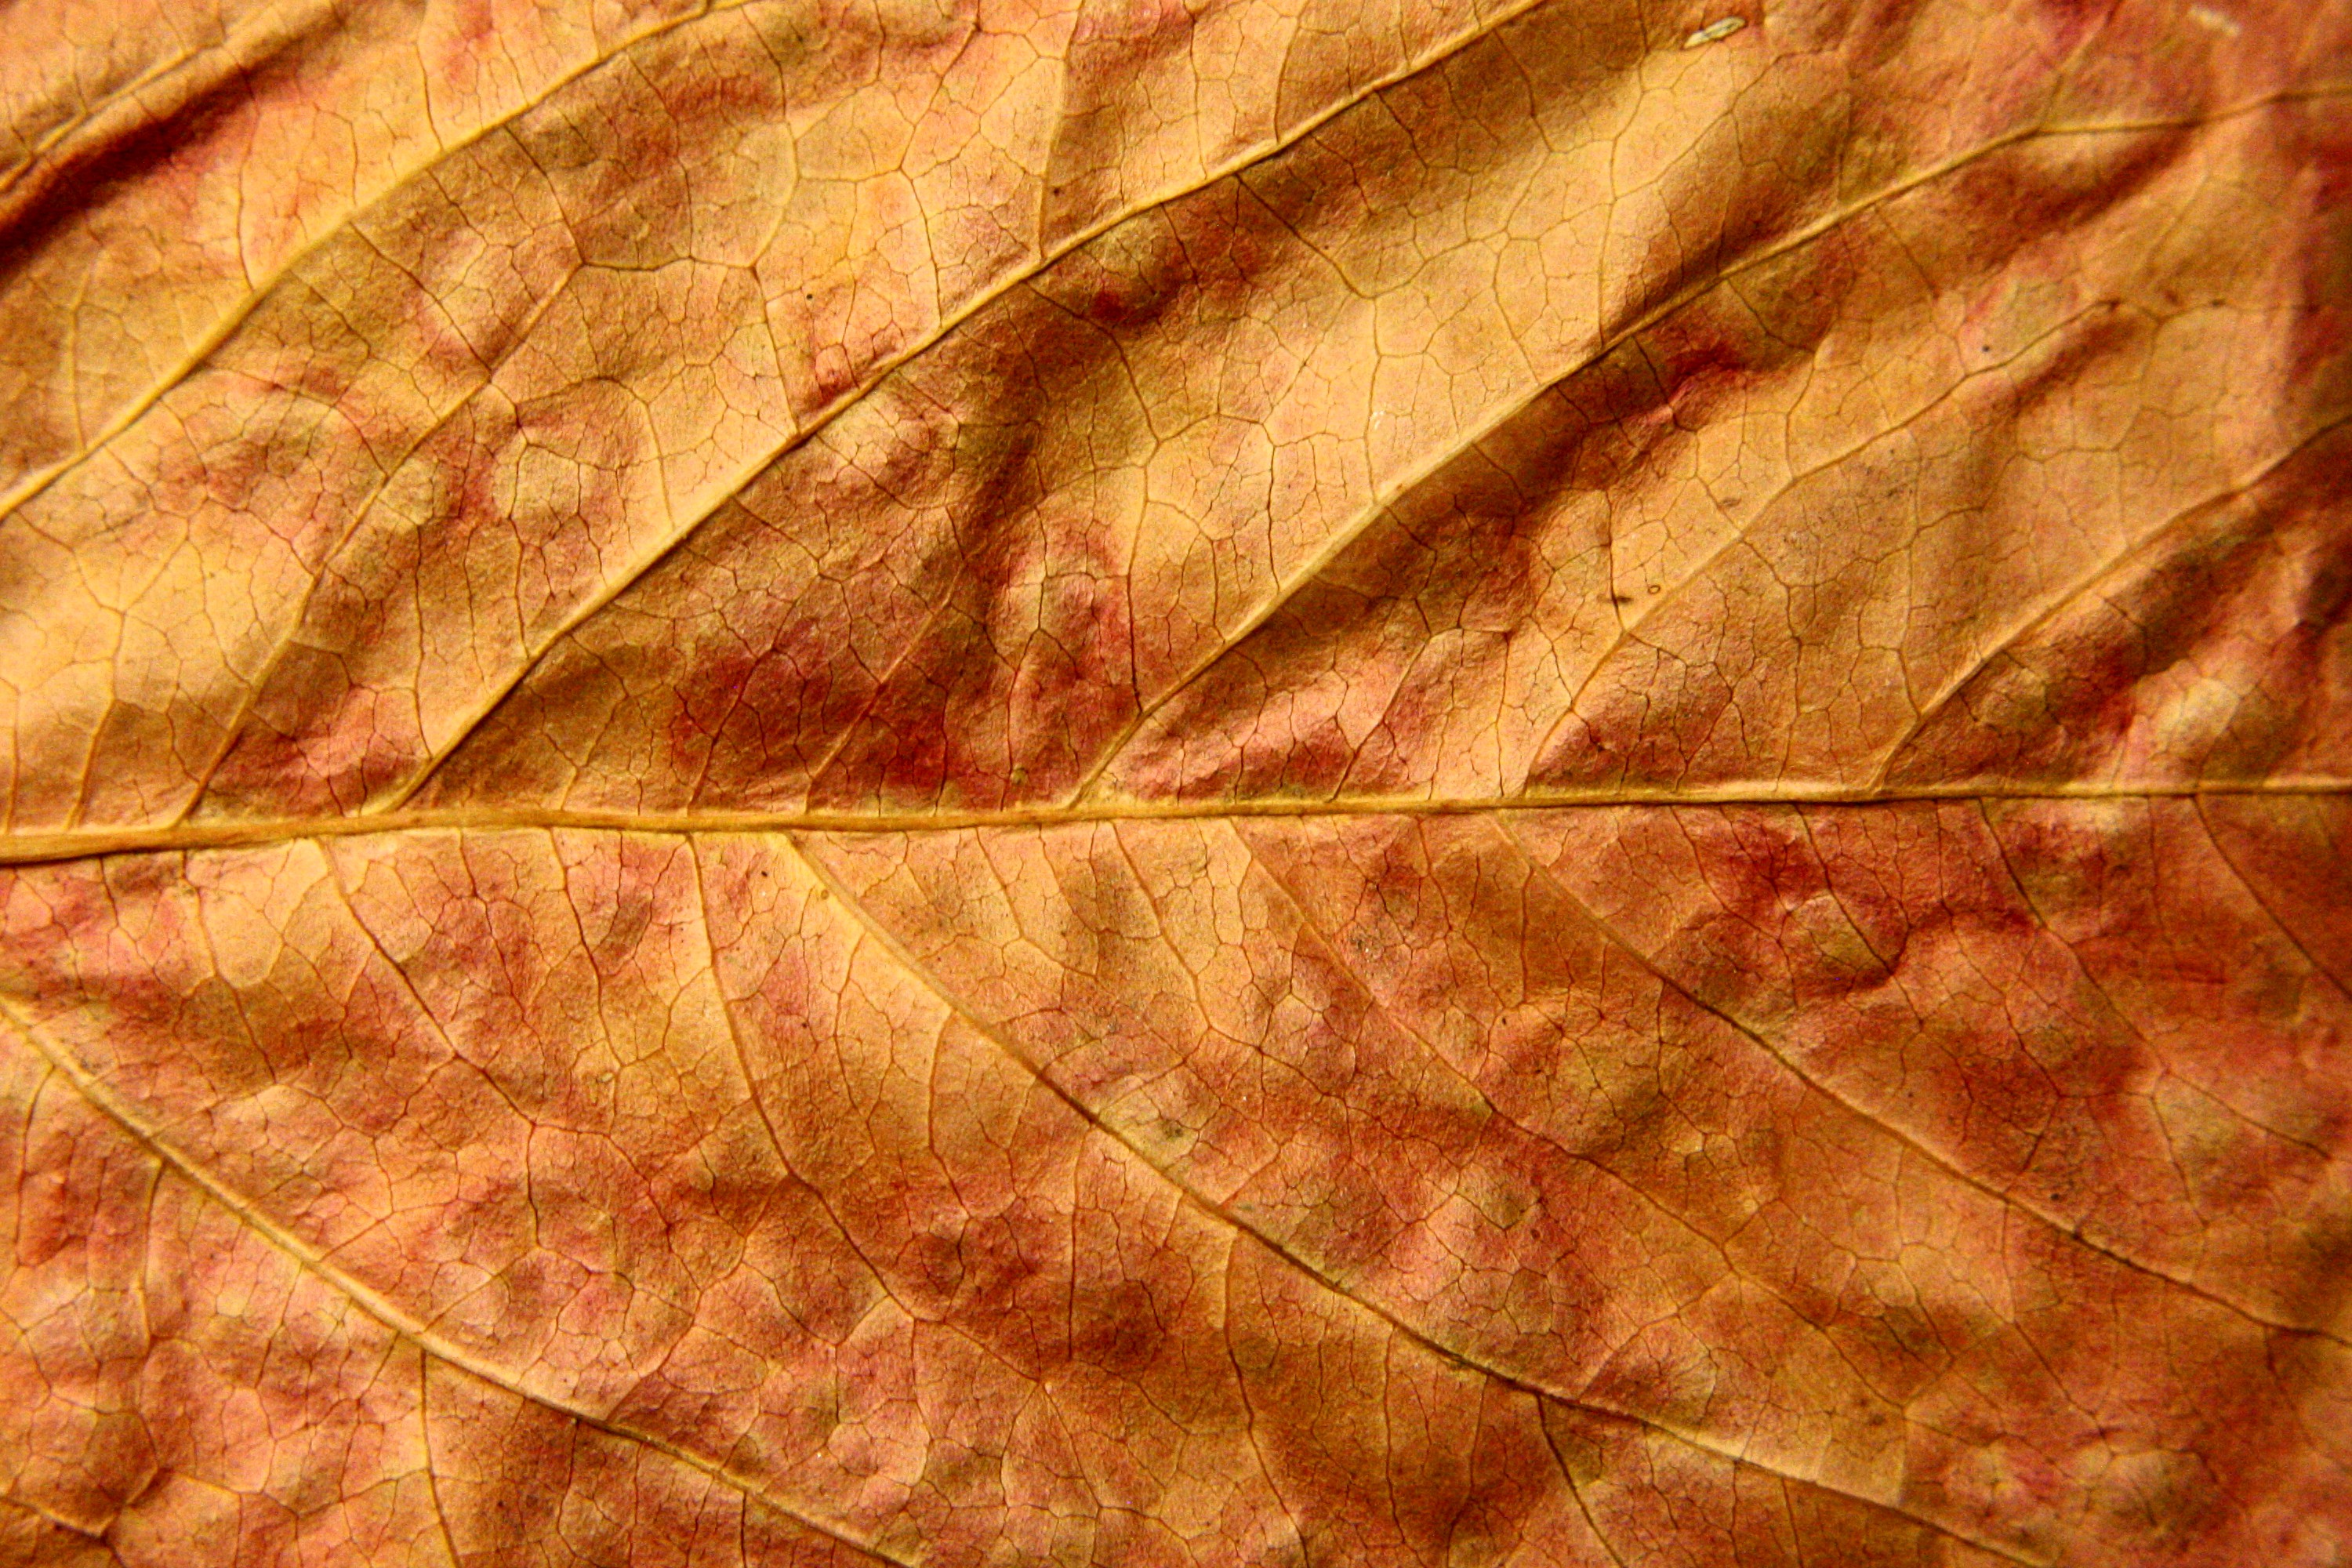 brown fall leaf